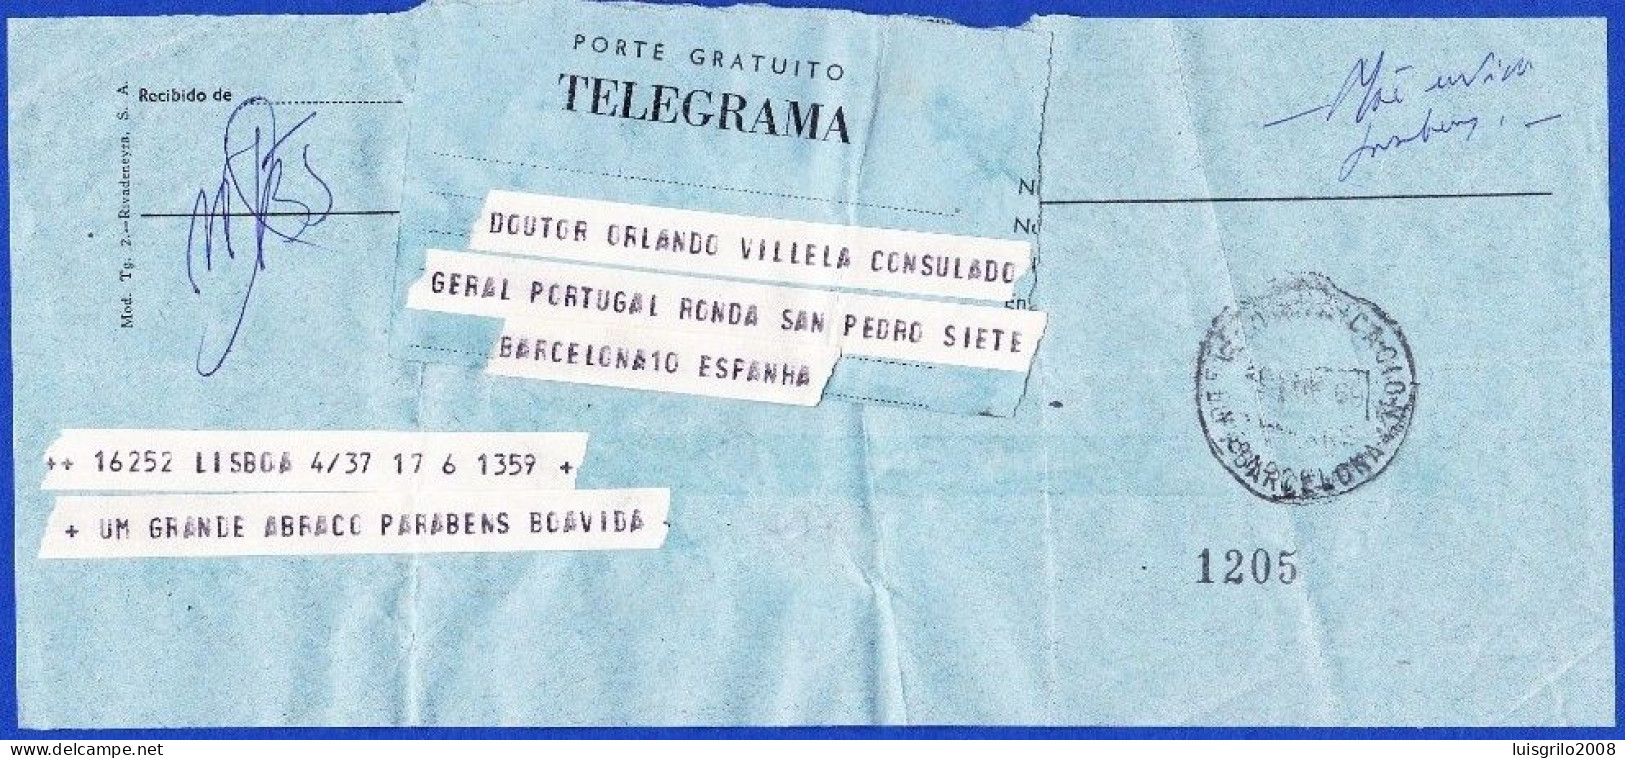 Telegrama Internacional - Lisboa > Consulado General De Portugal En Barcelona -|- Postmark - Barccelona. 1969 - Telegraph